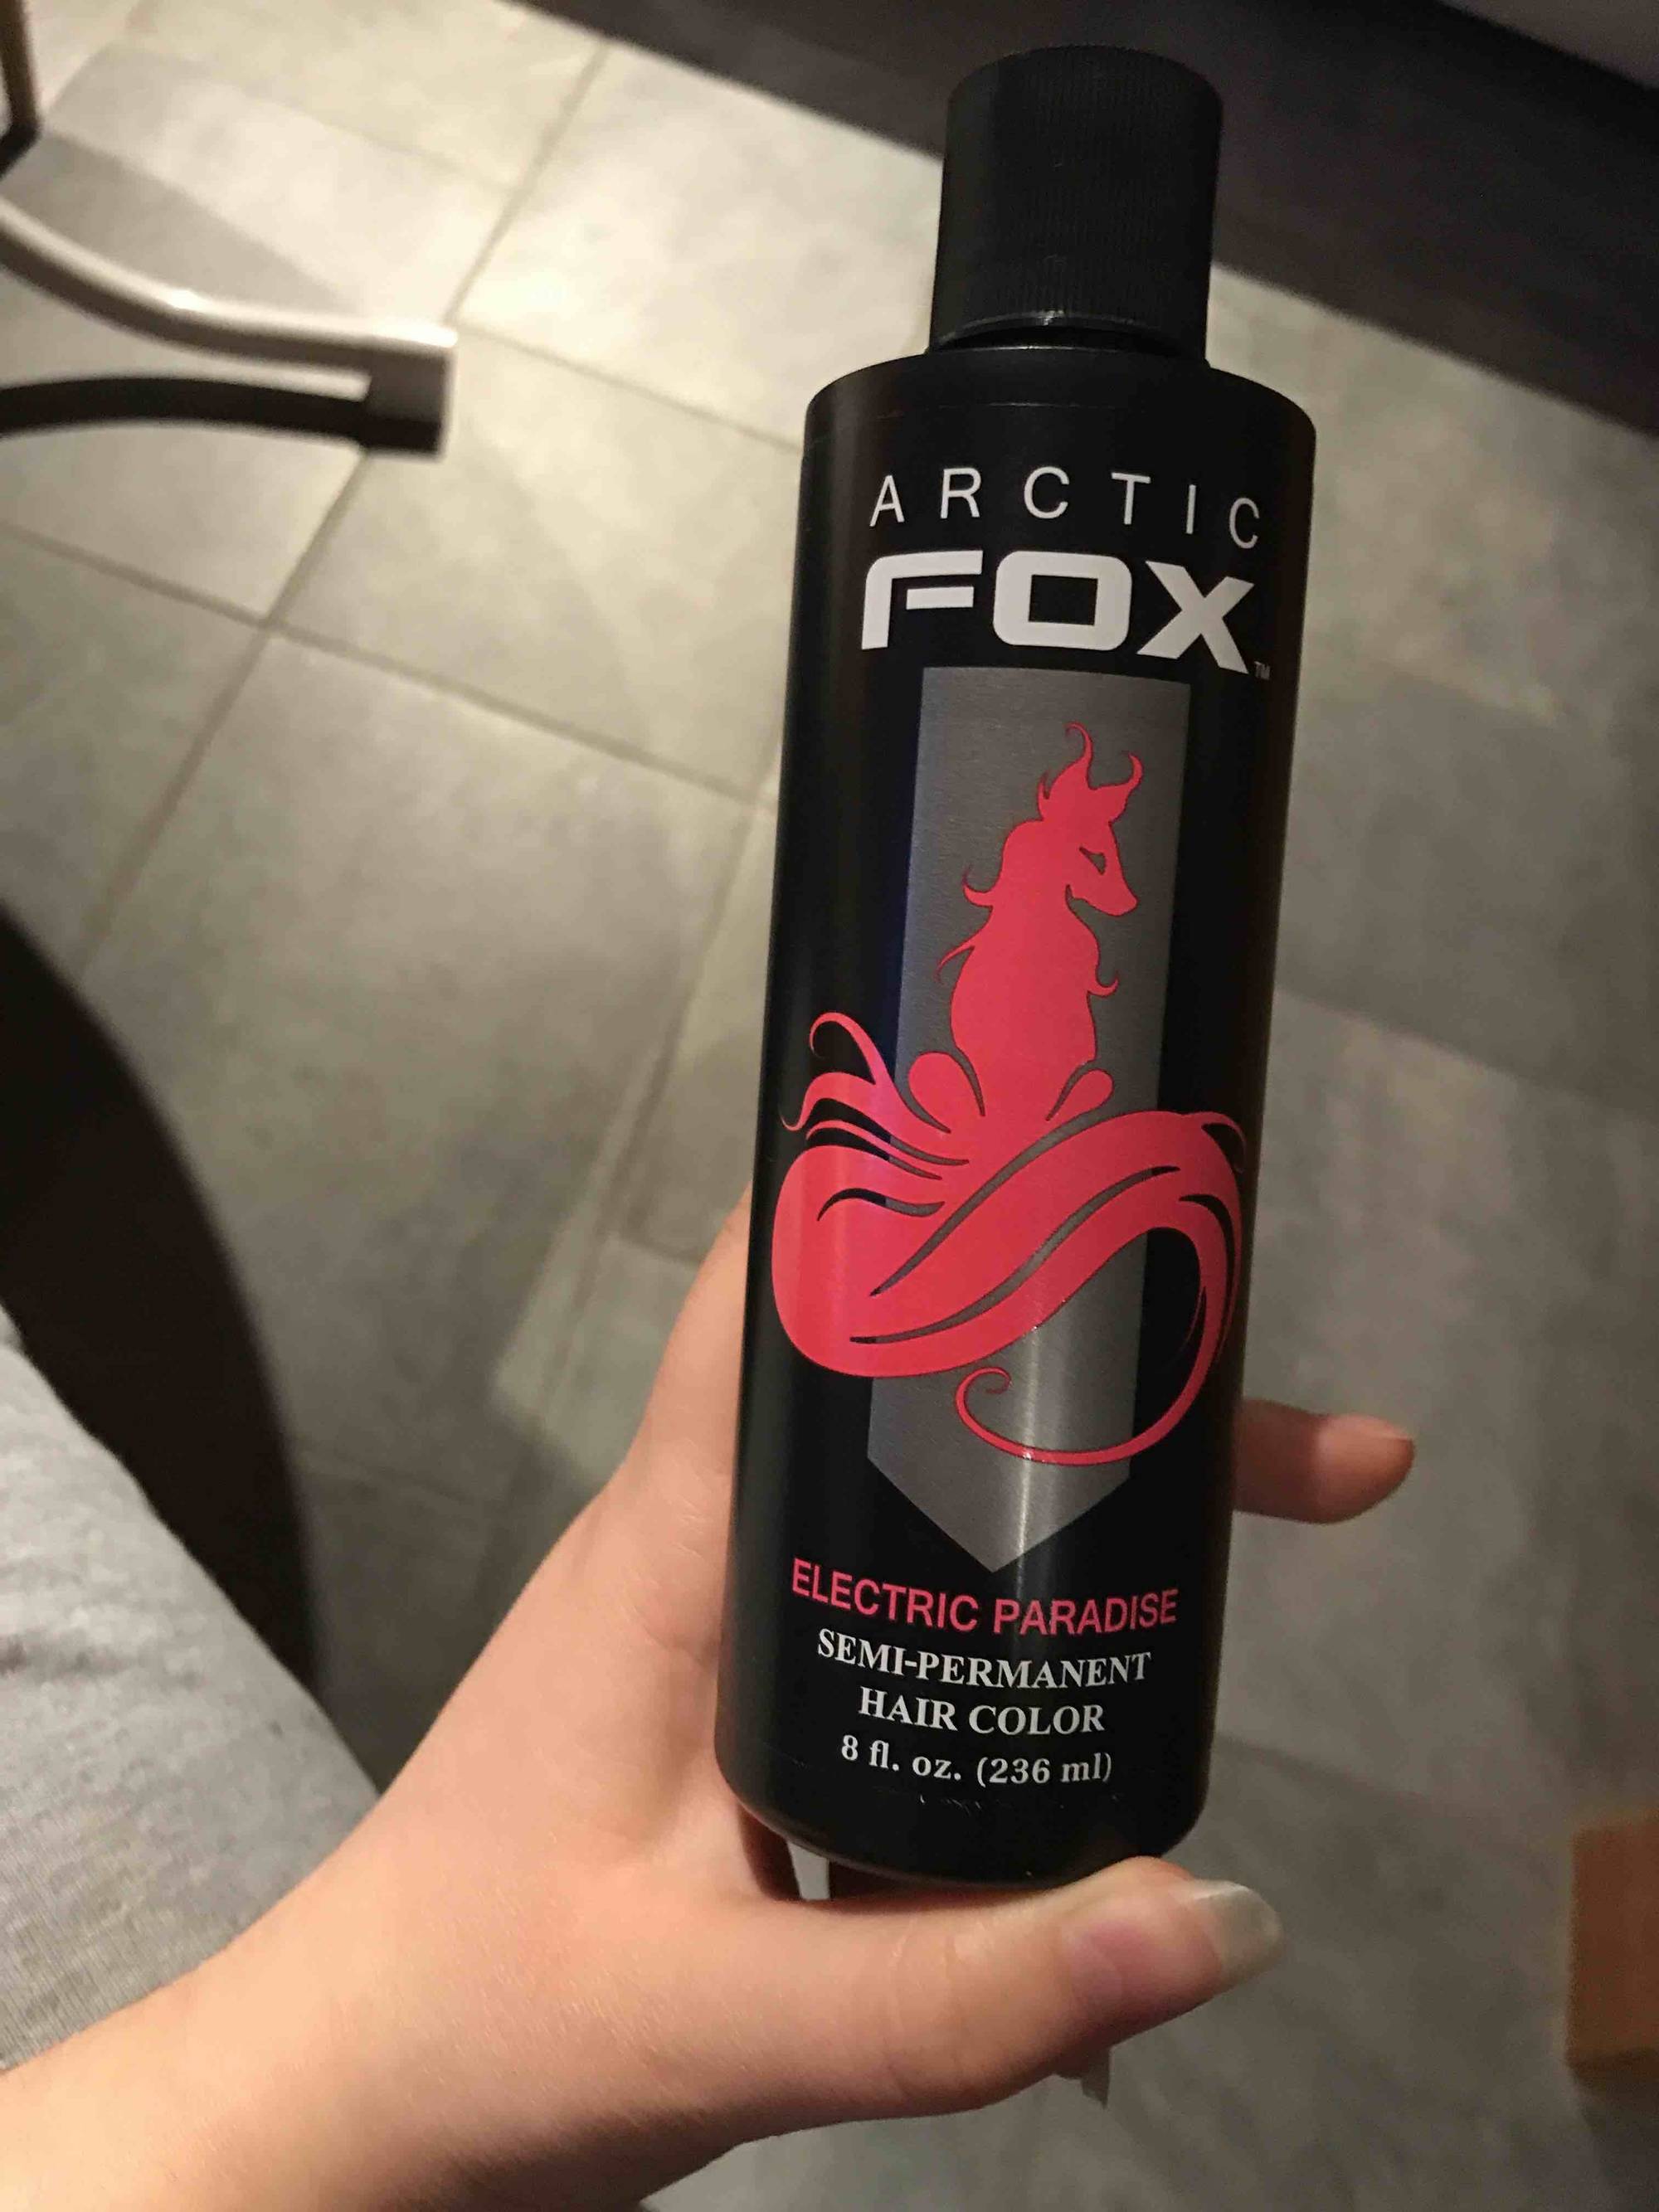 ARCTIC FOX - Electric paradise - Semi-permanent hair color